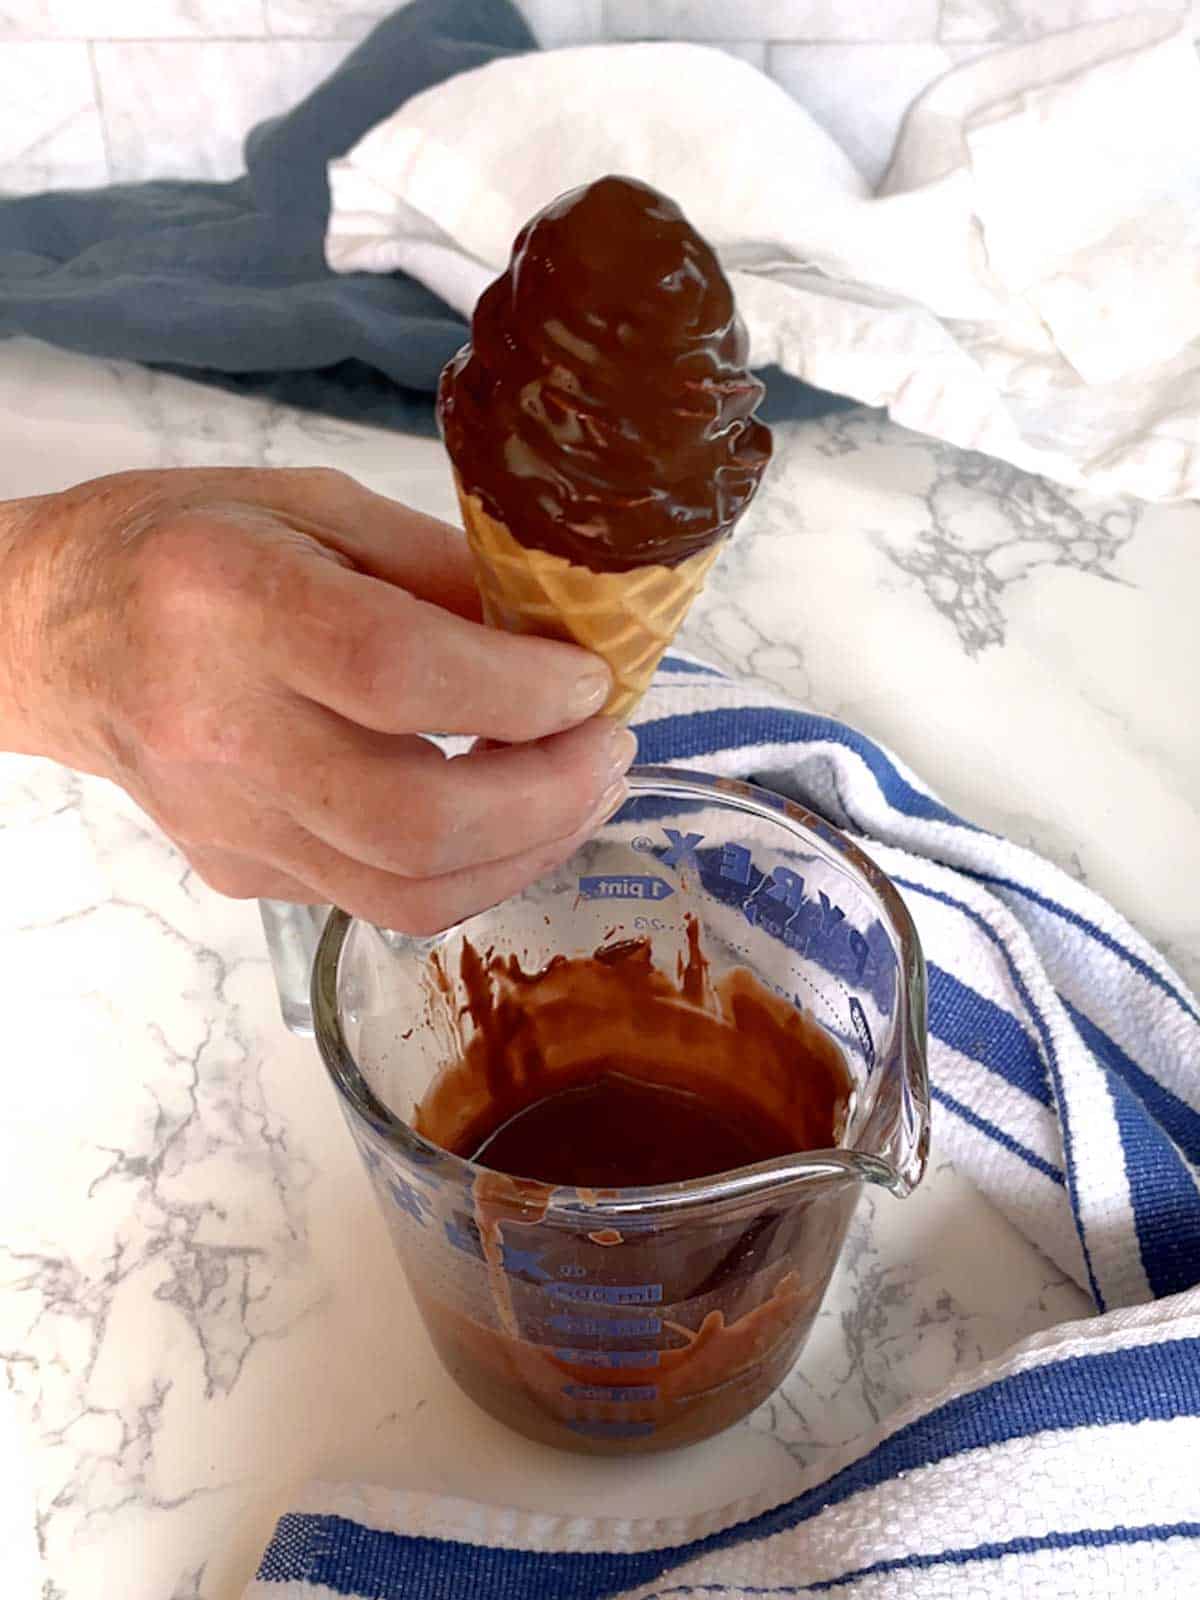 Ice cream cone dipped in magic shell.